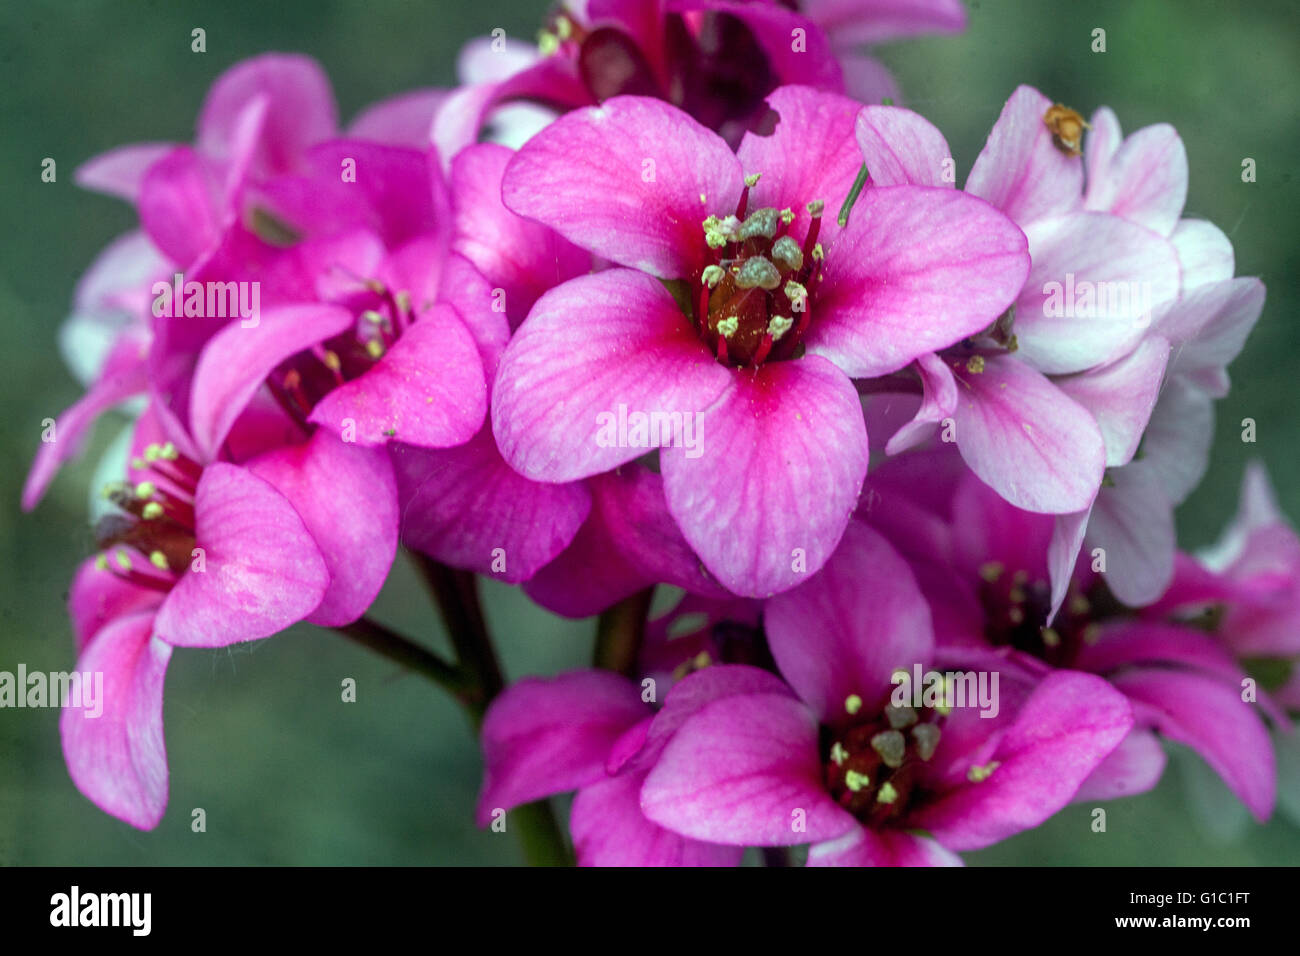 Elephant's ears, Bergenia 'Dragonfly Sakura' pink attractive flowering plant Stock Photo